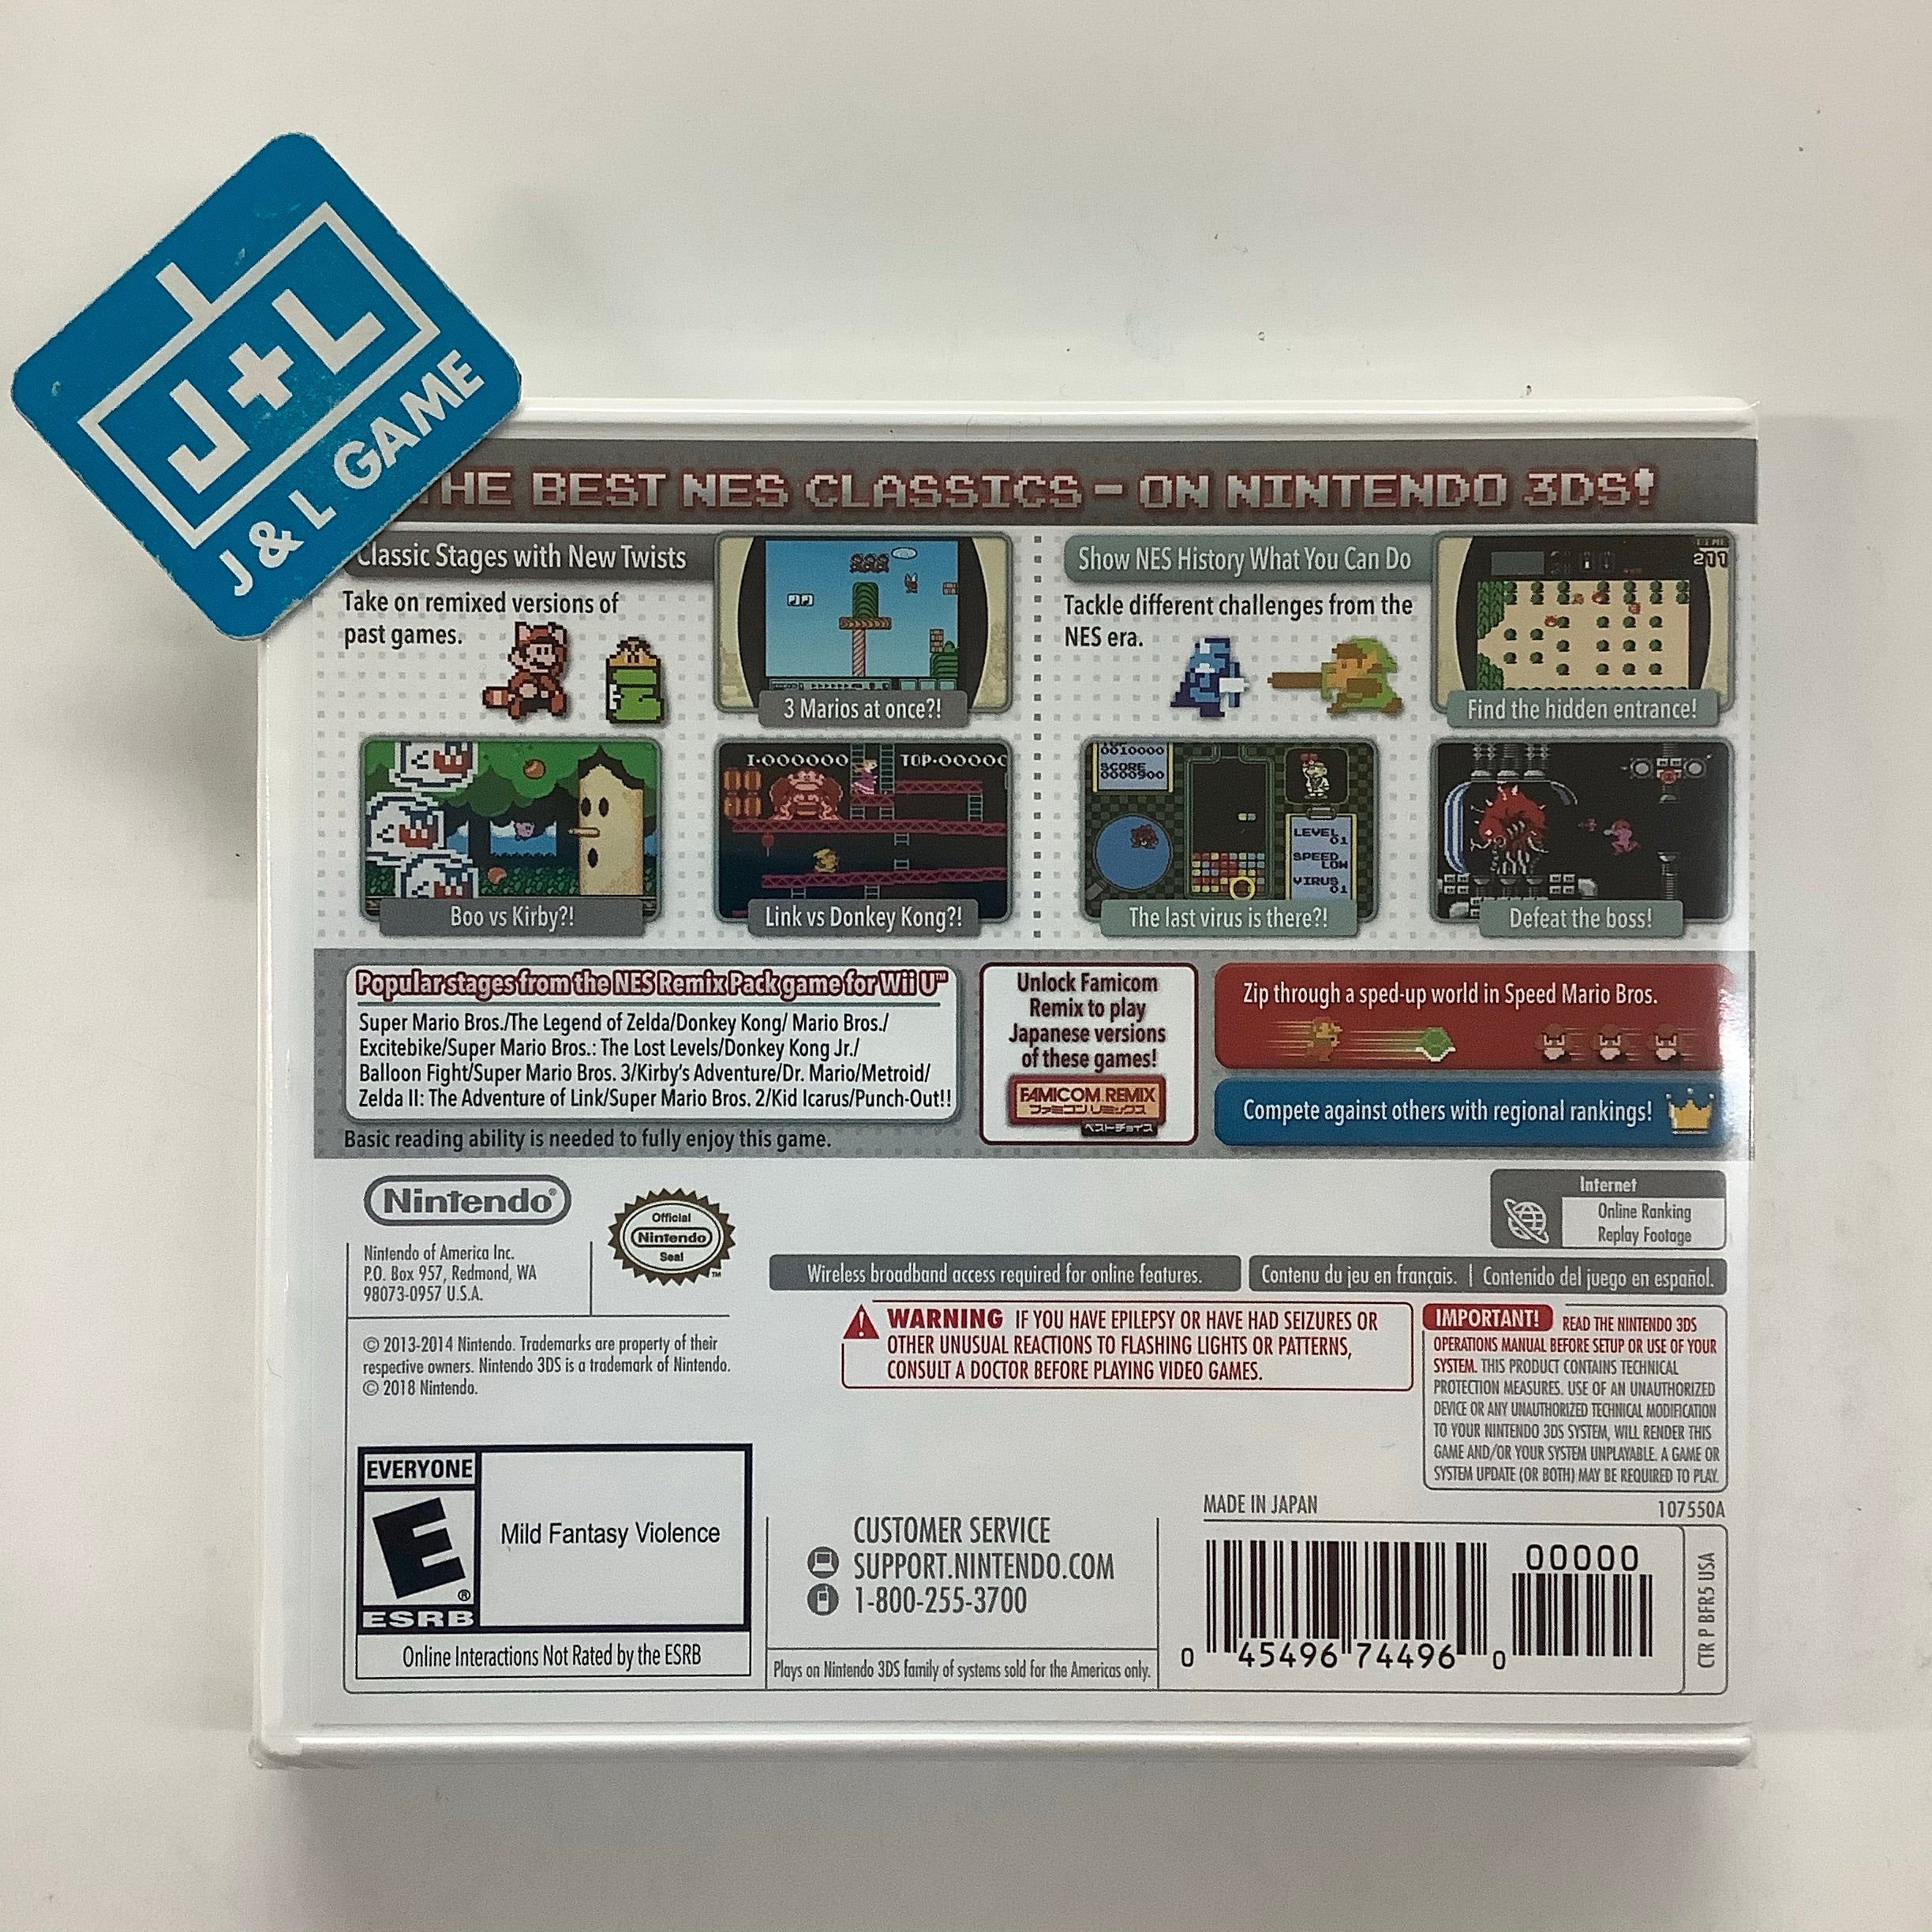 Ultimate NES Remix (Nintendo Selects) - Nintendo 3DS Video Games Nintendo   